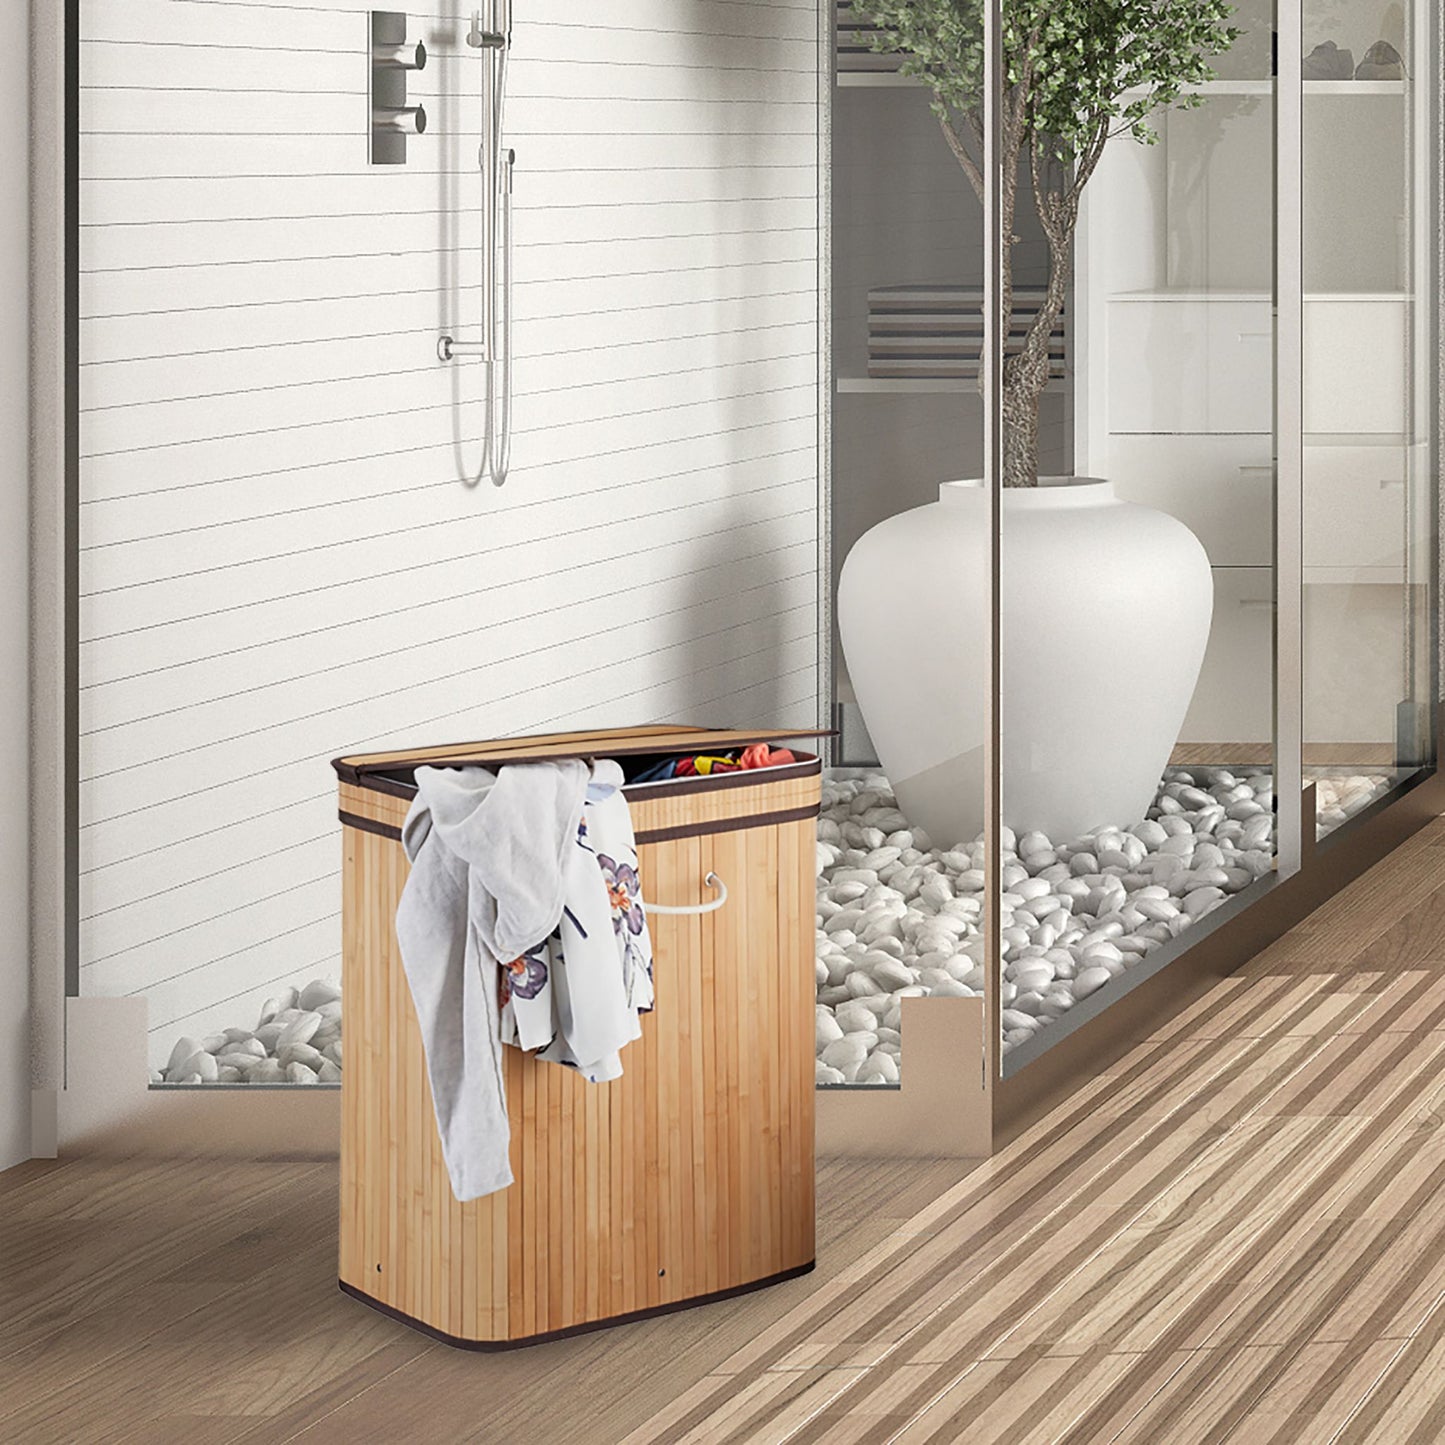 RelaxDays Lidded Laundry Hamper Bamboo Bathrooms